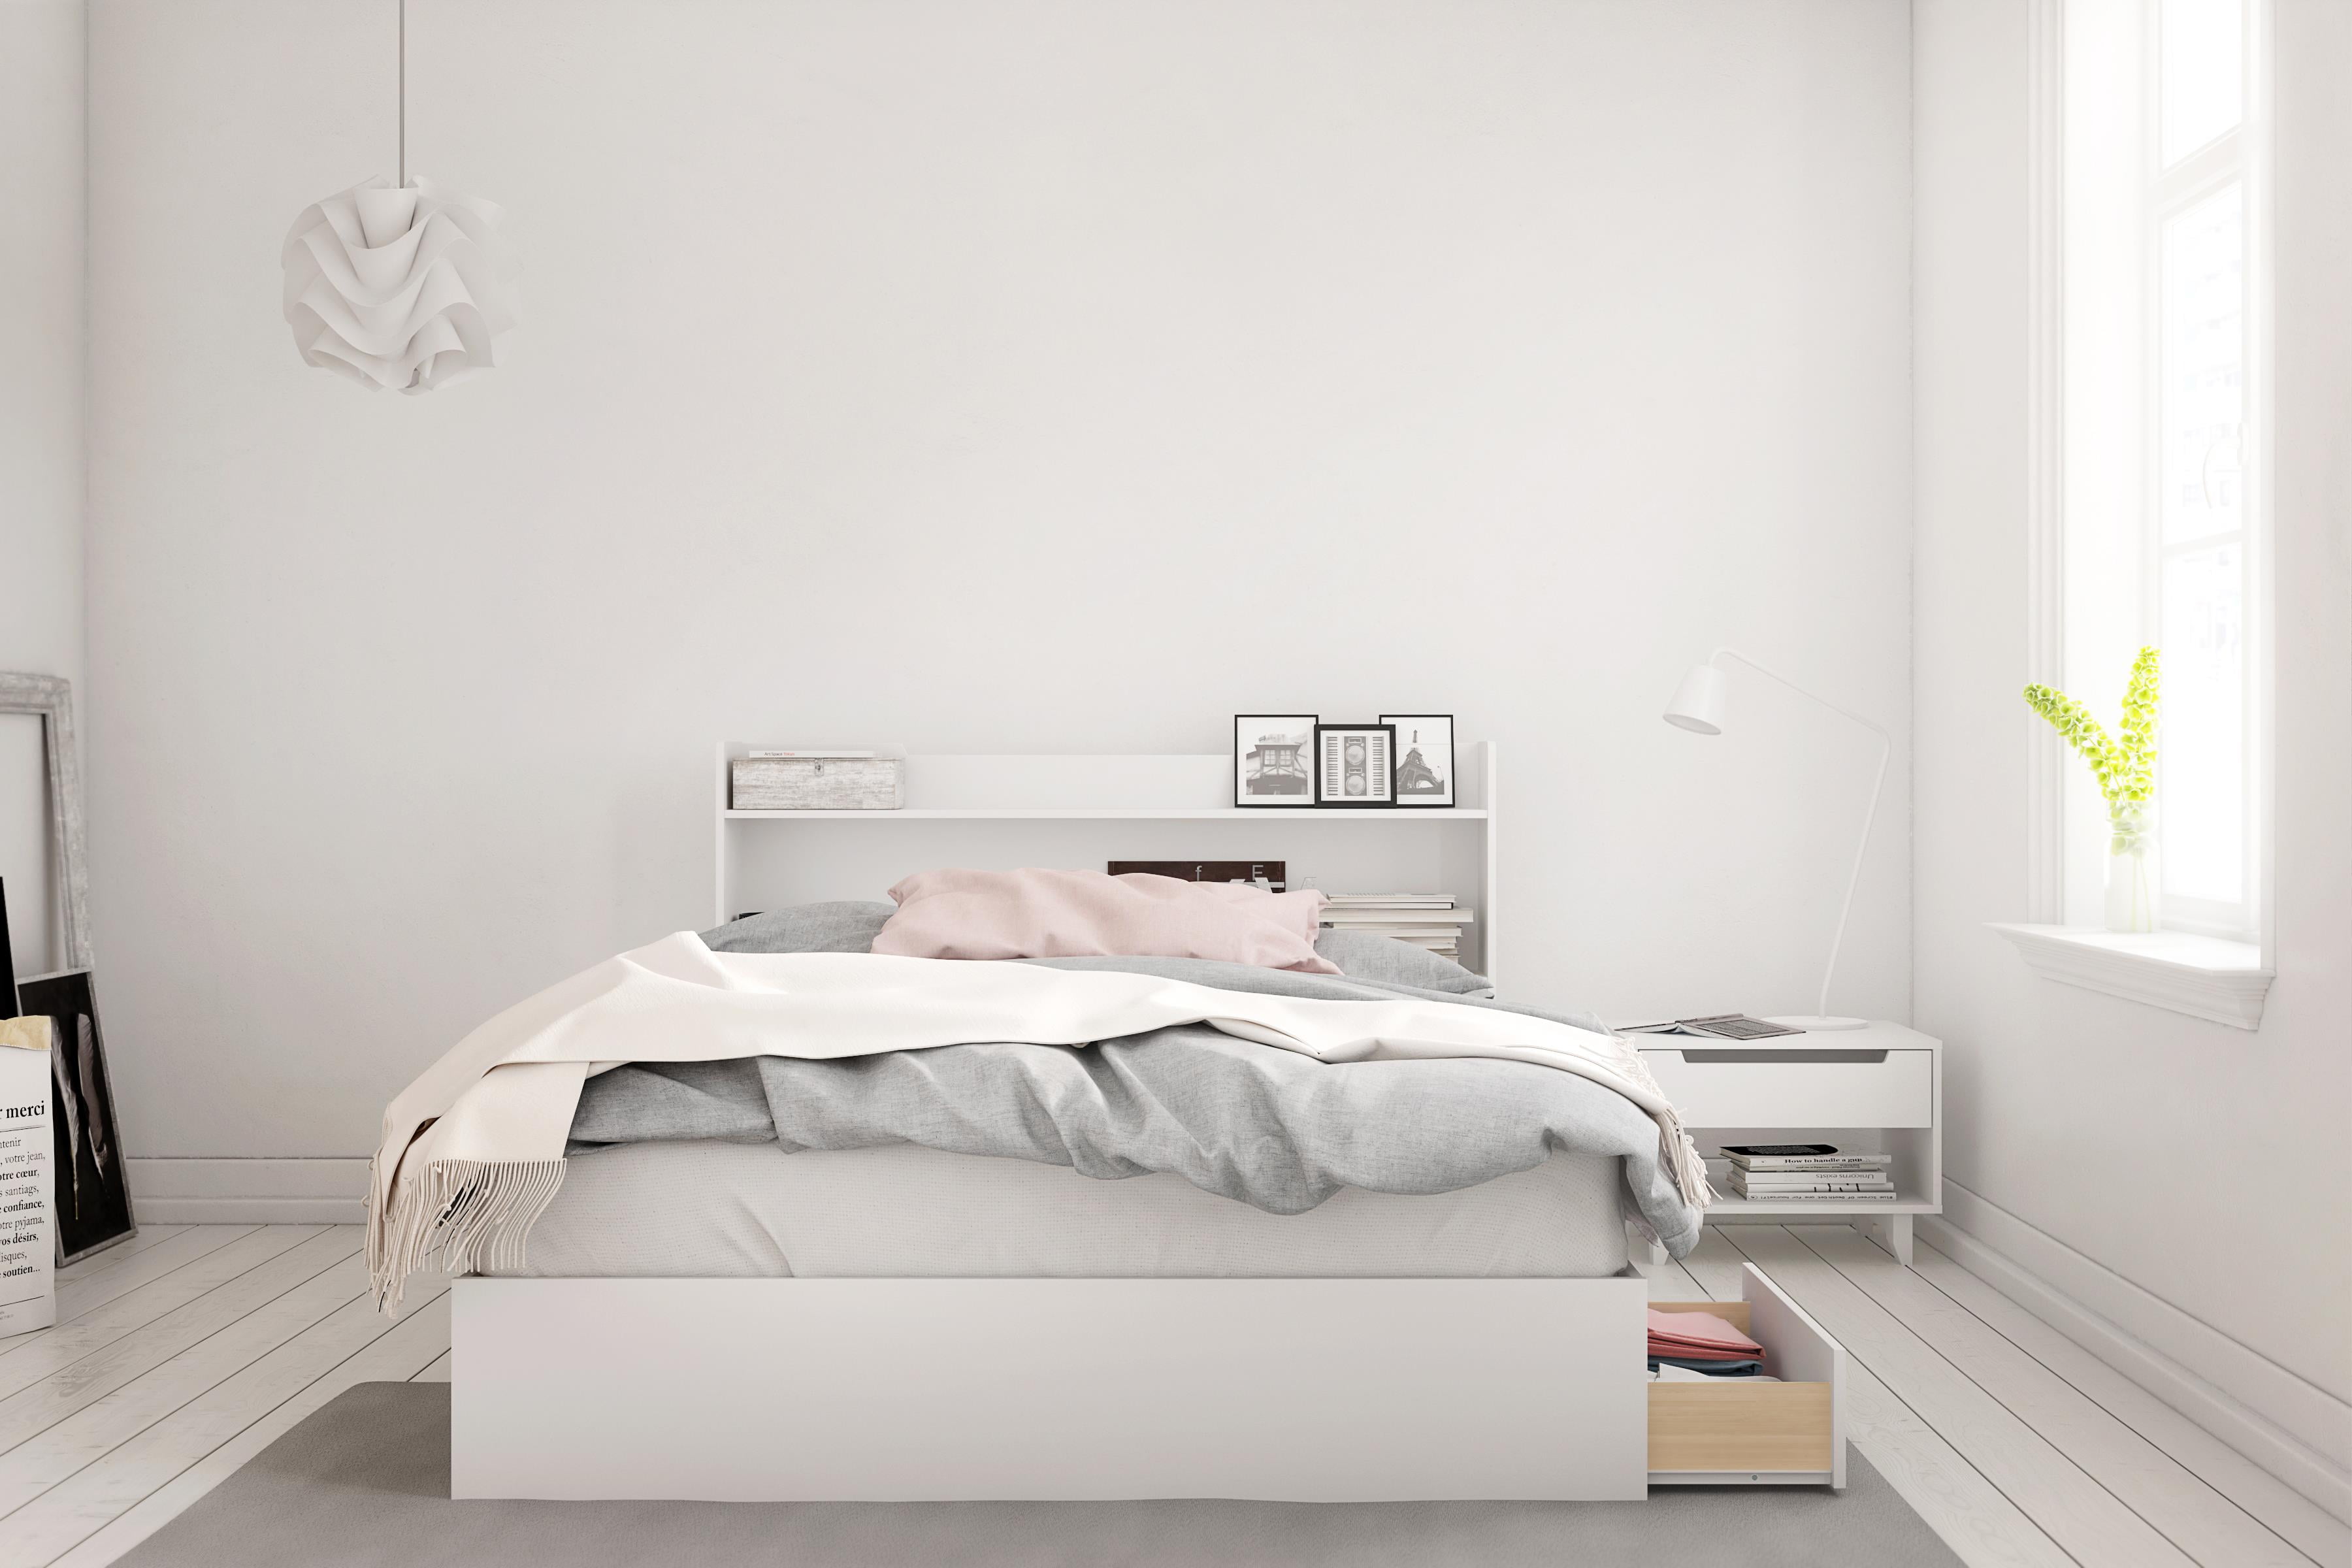 aura bedroom furniture perth